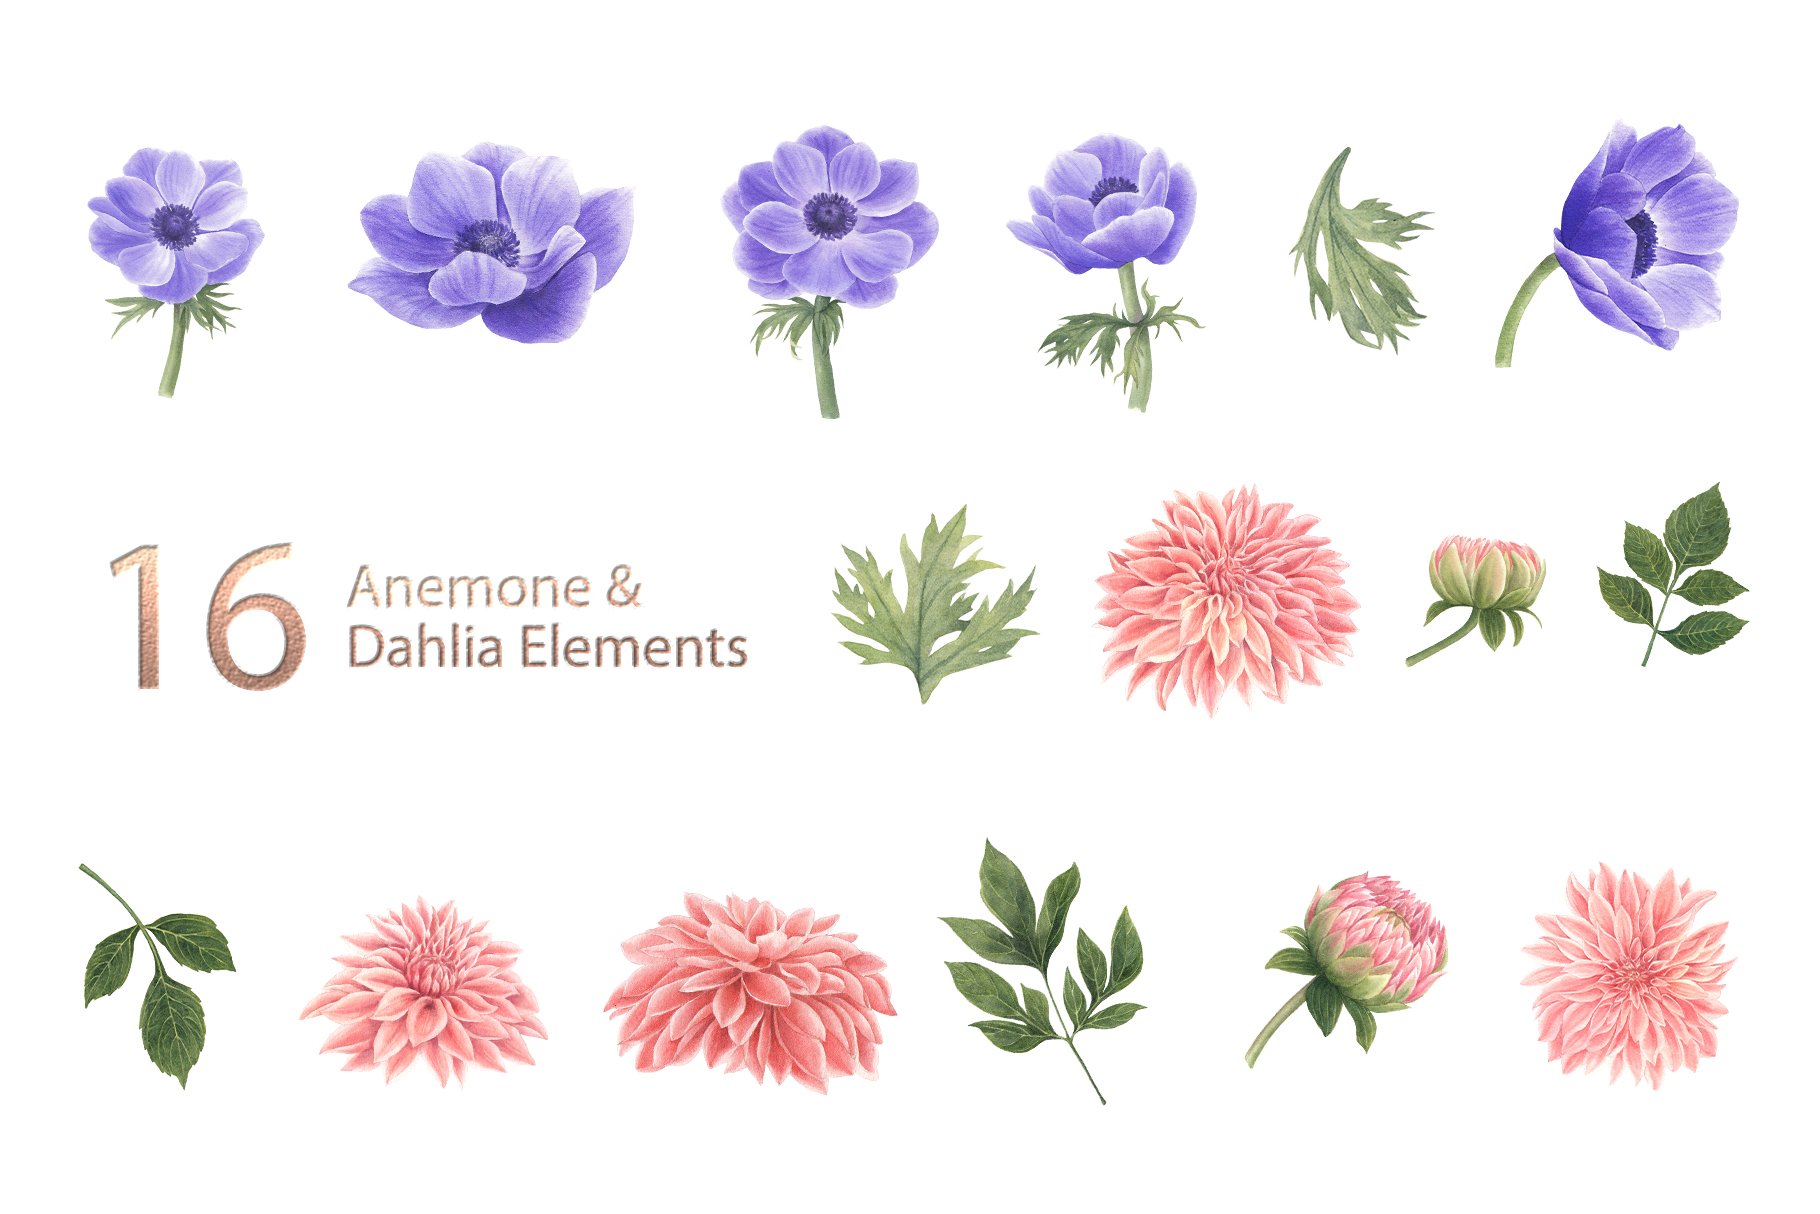 Anemone & Dahlia Flowers Watercolor